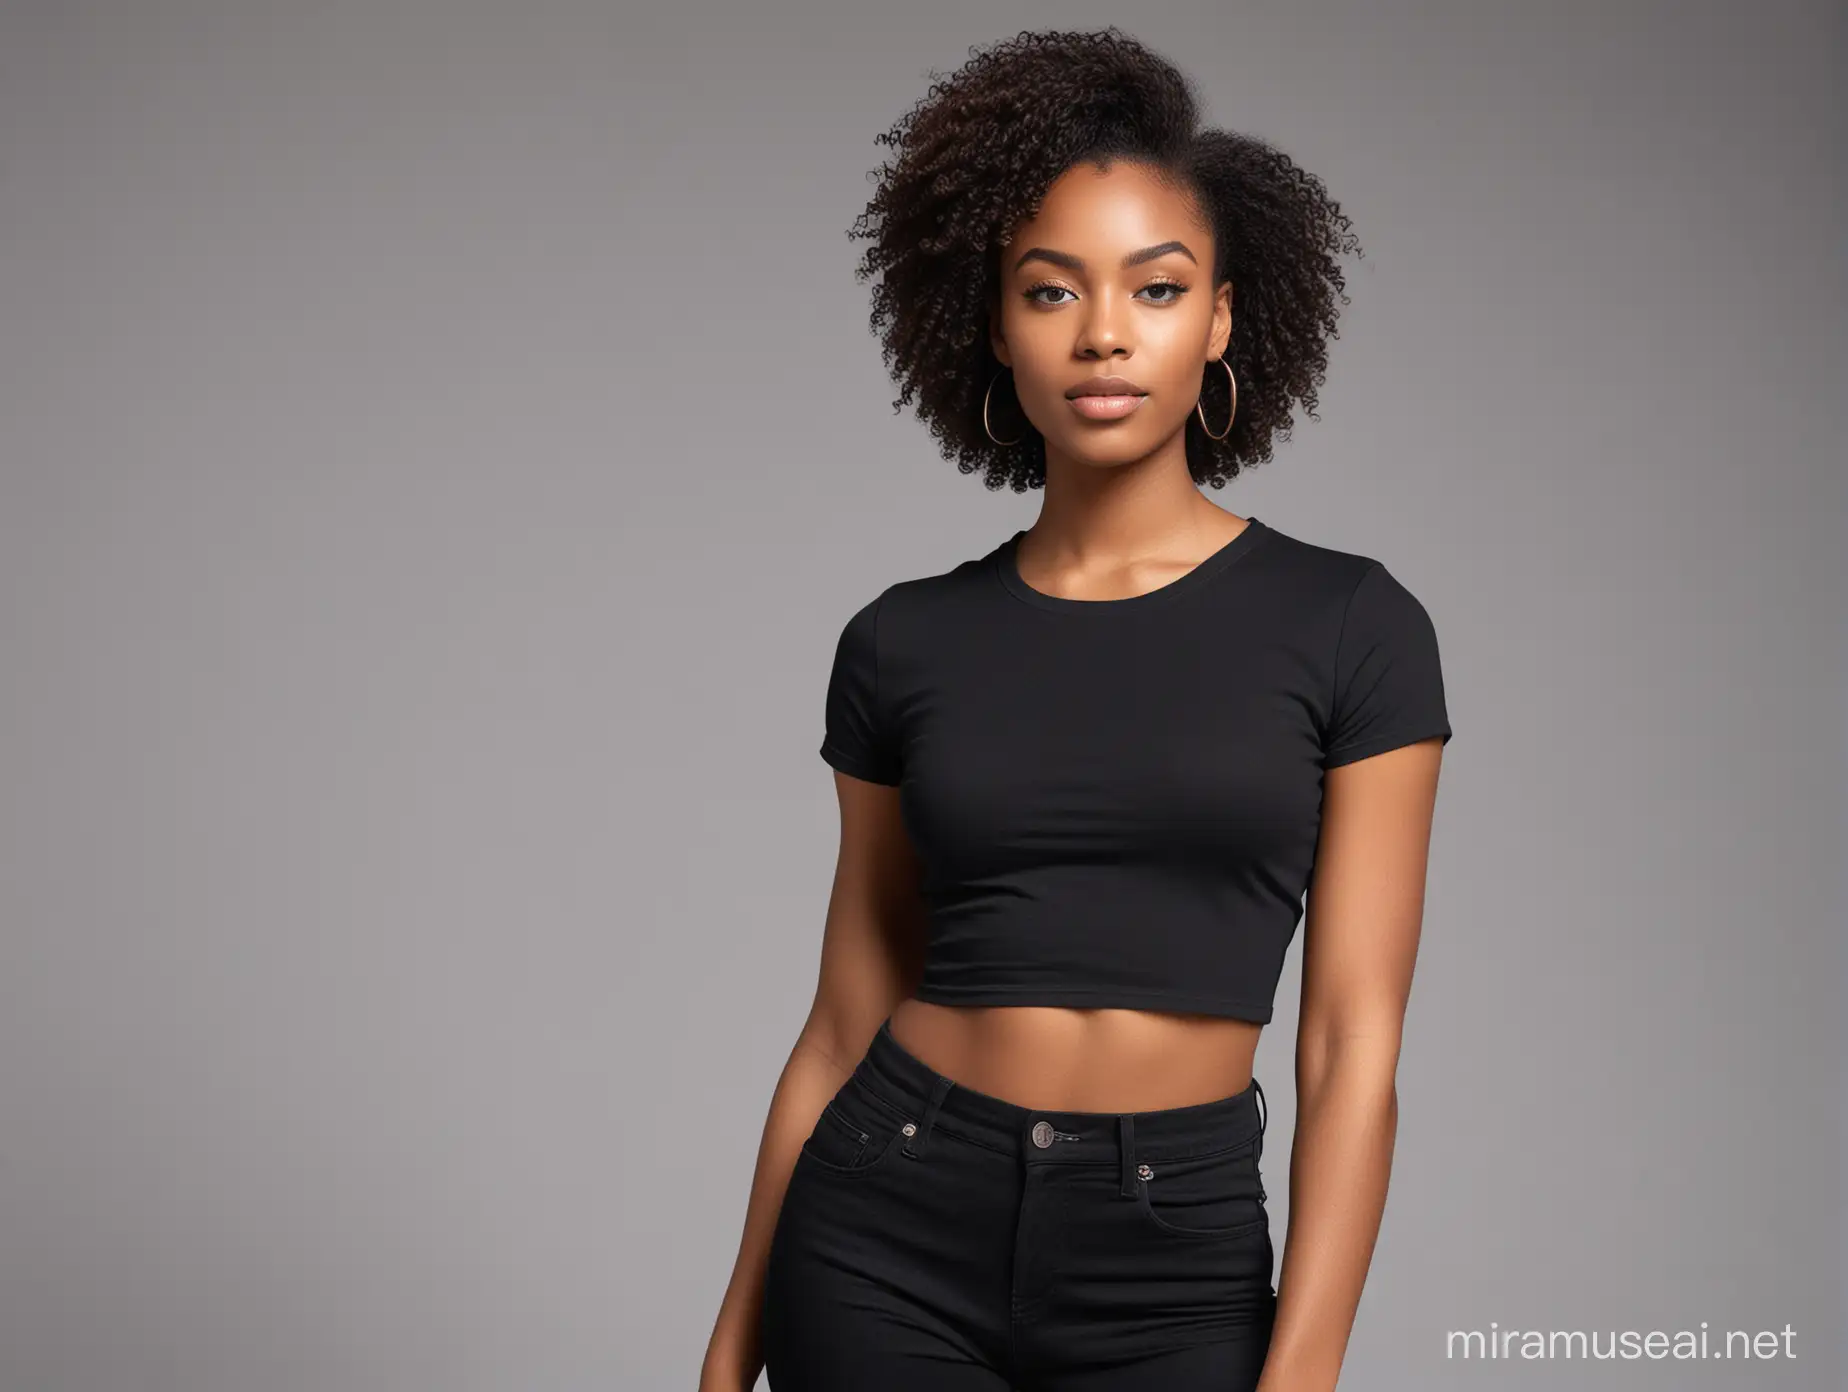 A beautiful black woman model wearing a blank black crop top t-shirt